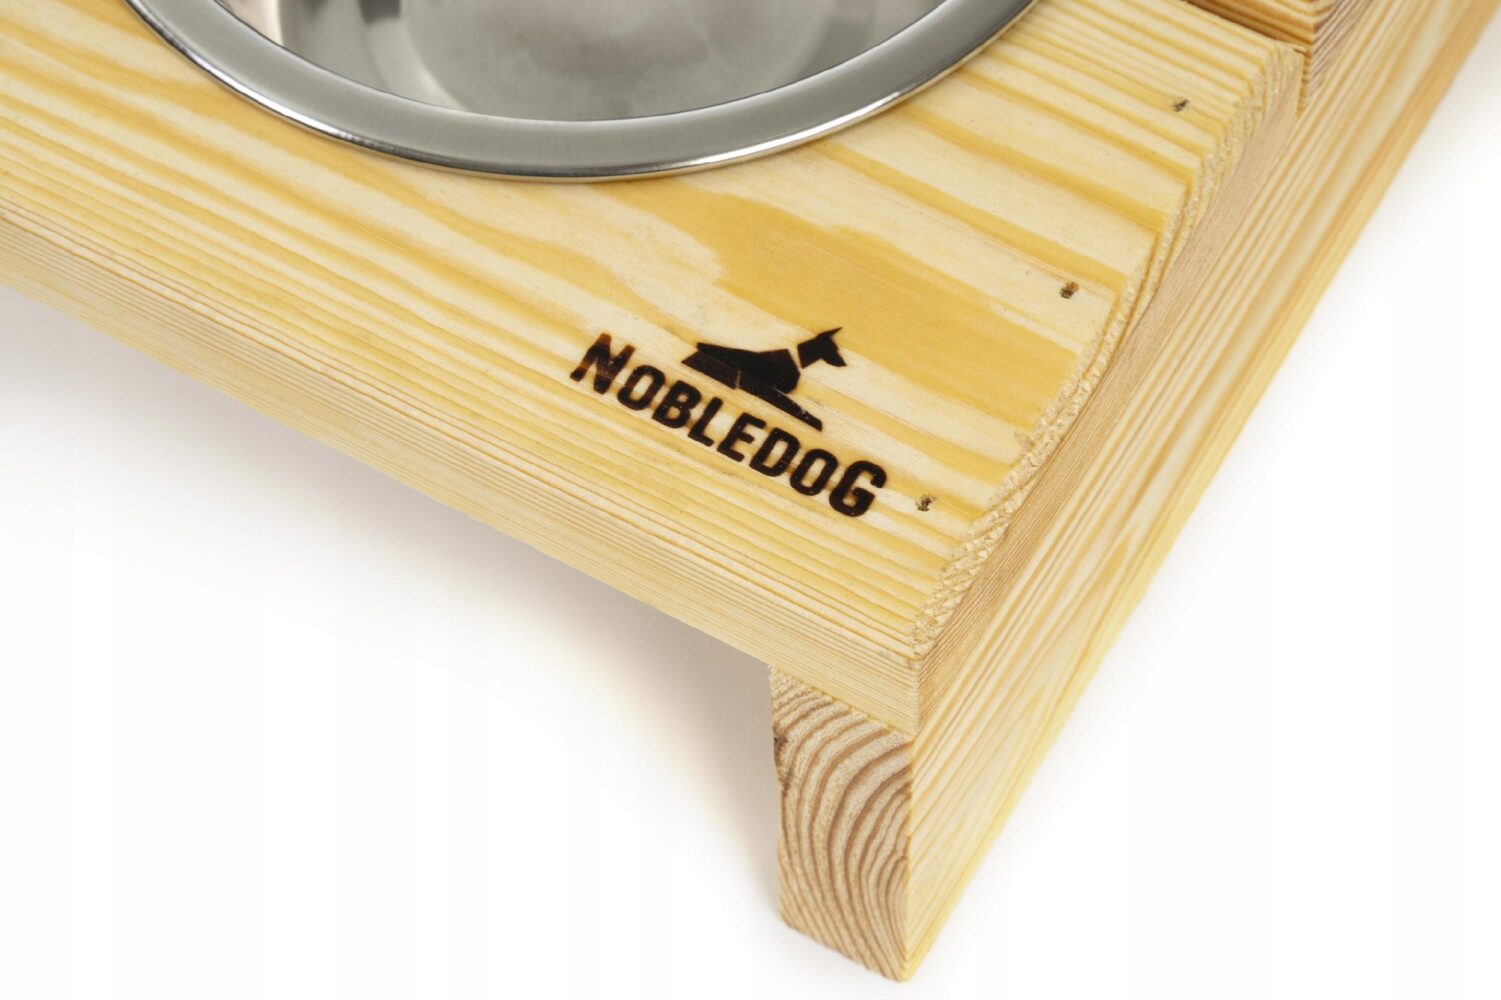 Drewniany stojak na miski dla psa NobleDog